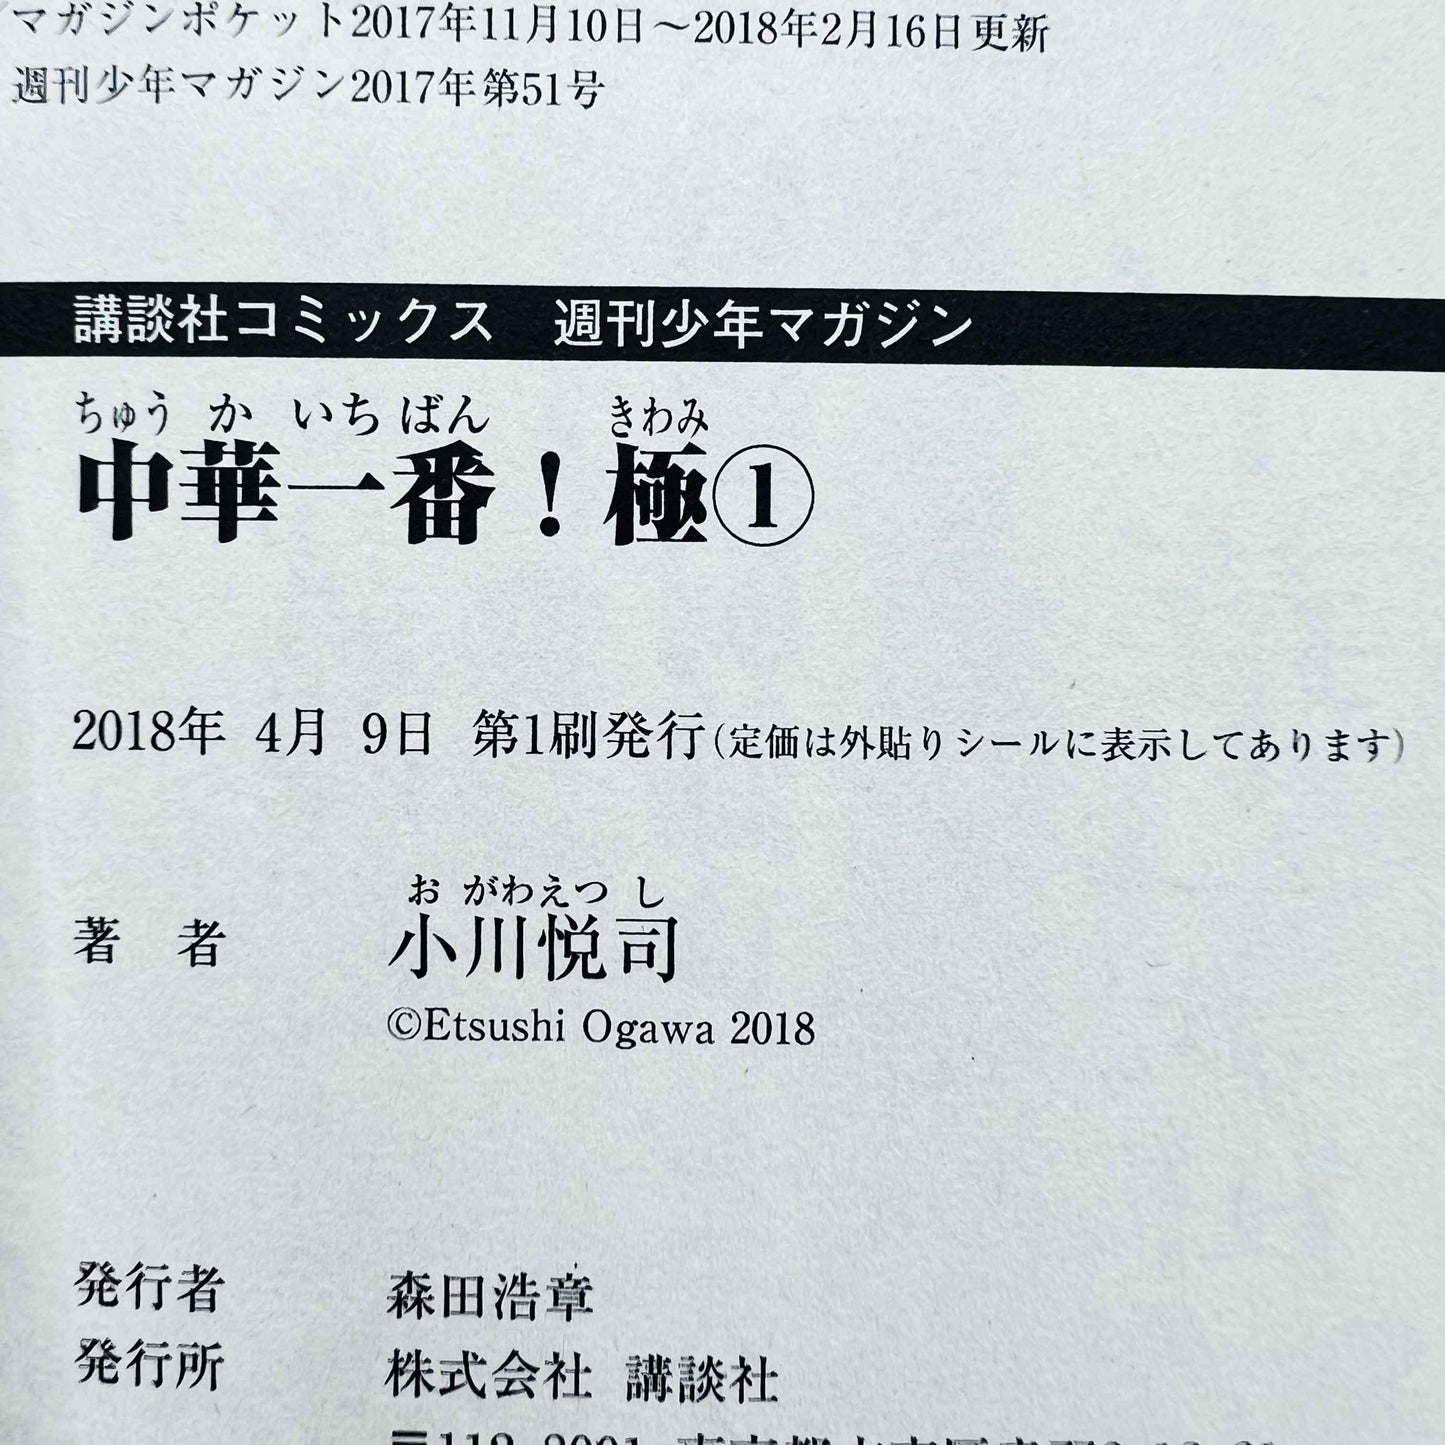 Chuuka Ichiban Kiwami - Volume 01 - 1stPrint.net - 1st First Print Edition Manga Store - M-CHUKAICHI-01-001